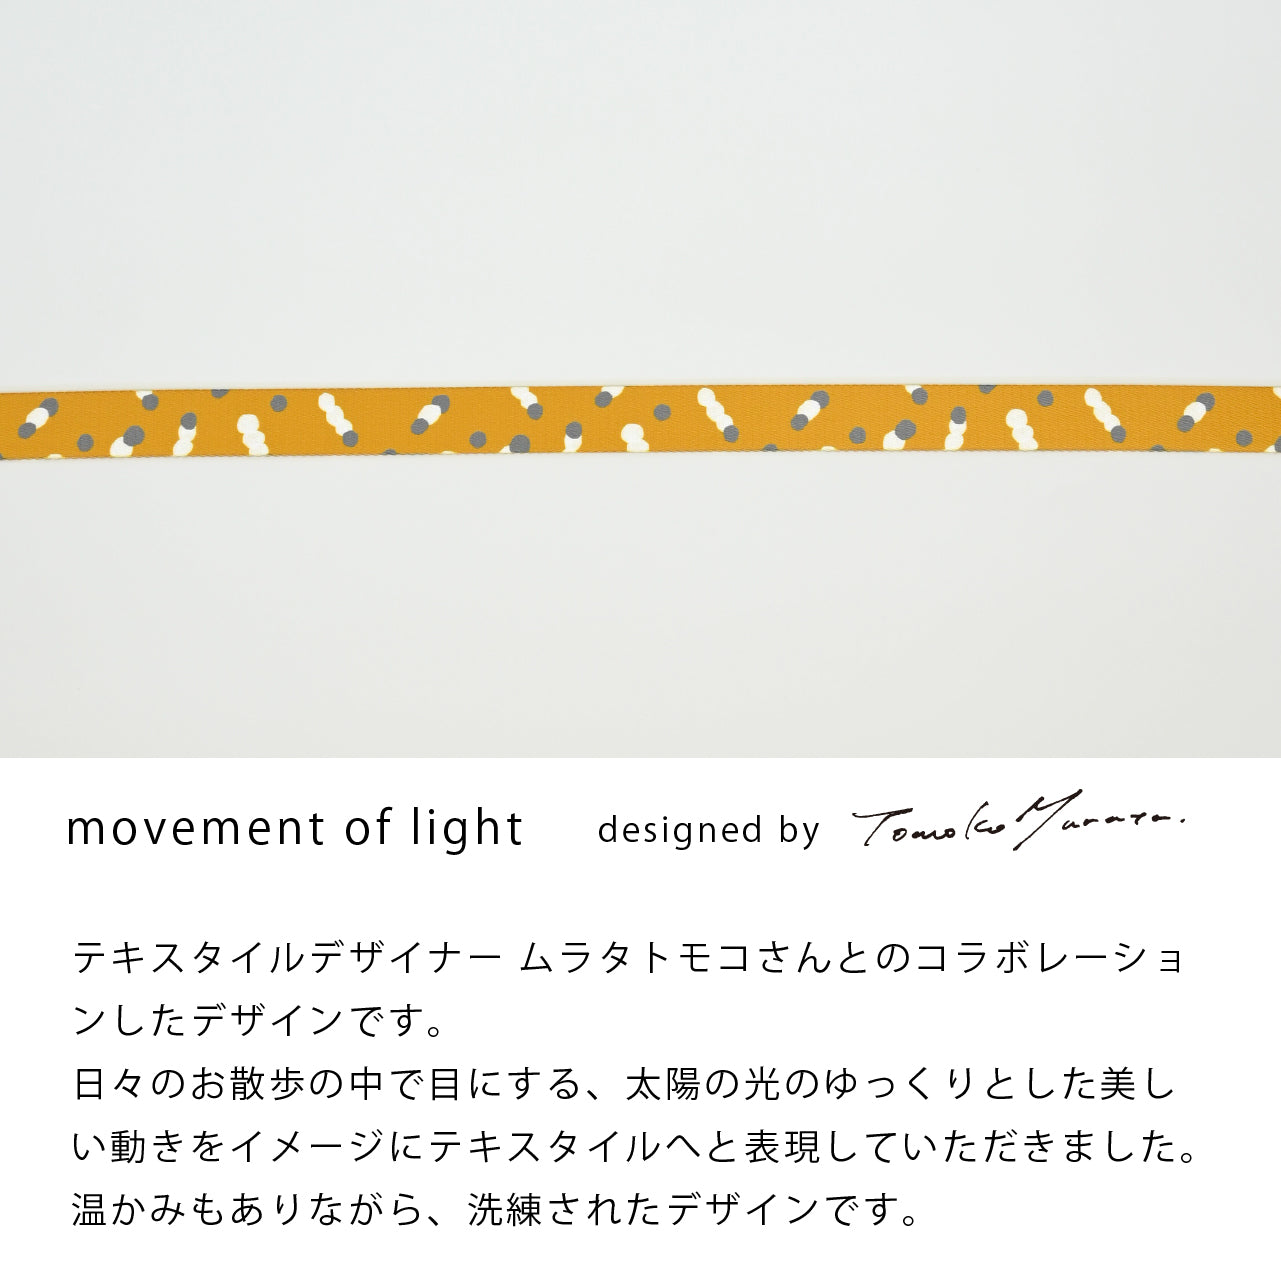 inuno. × tomokomurata リード 「movement of light」イエロー